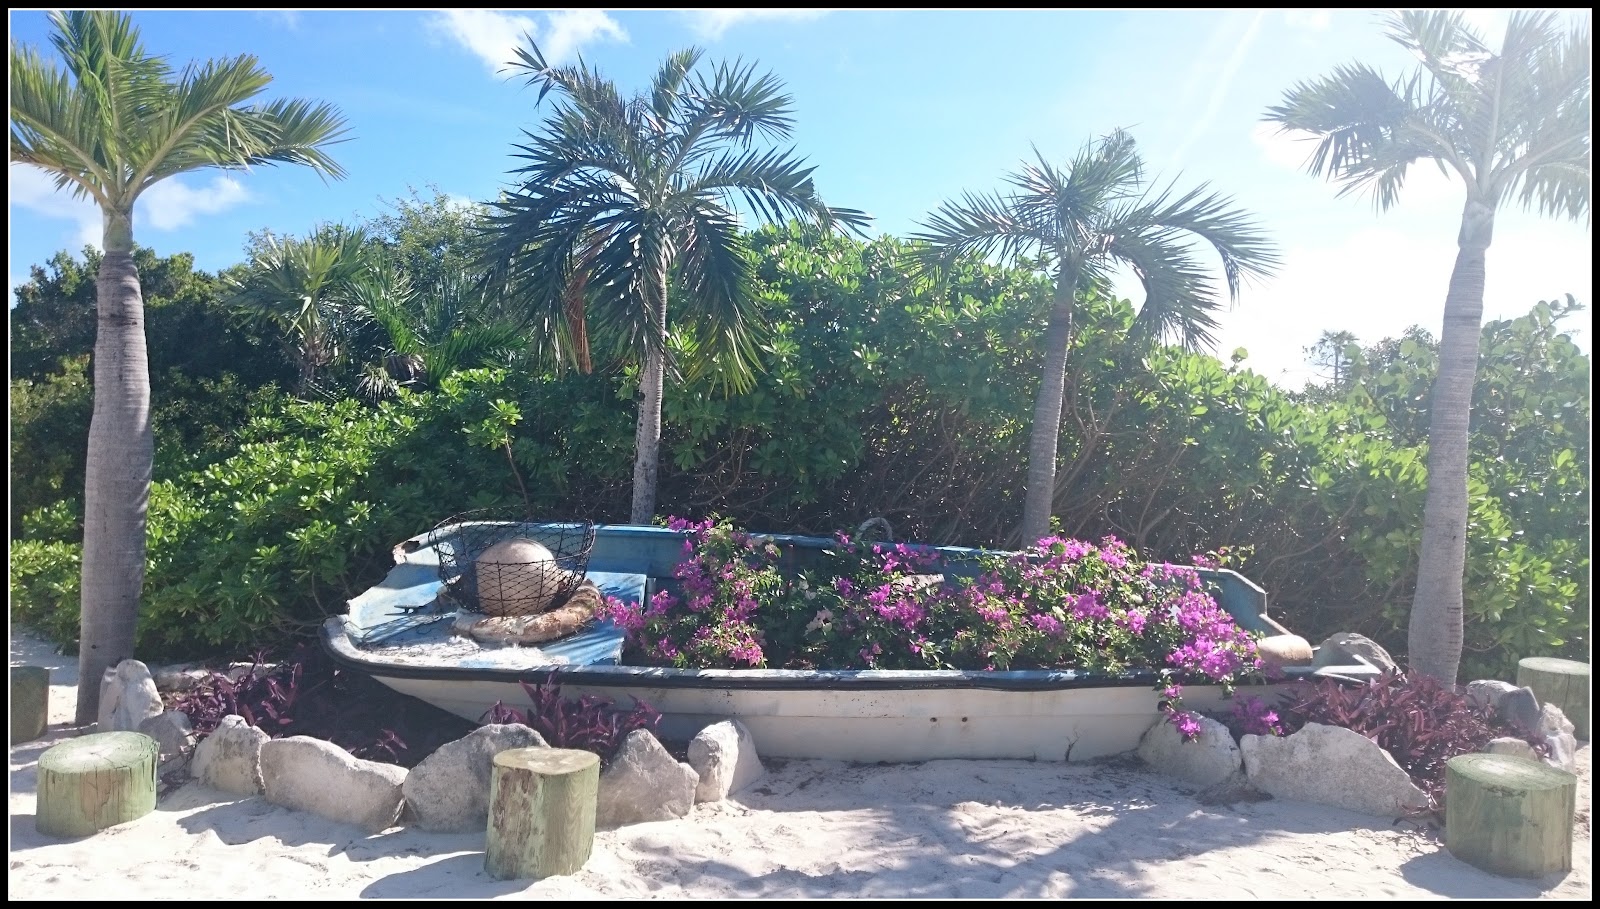 Bahamas-palm-trees-and-boat.jpg